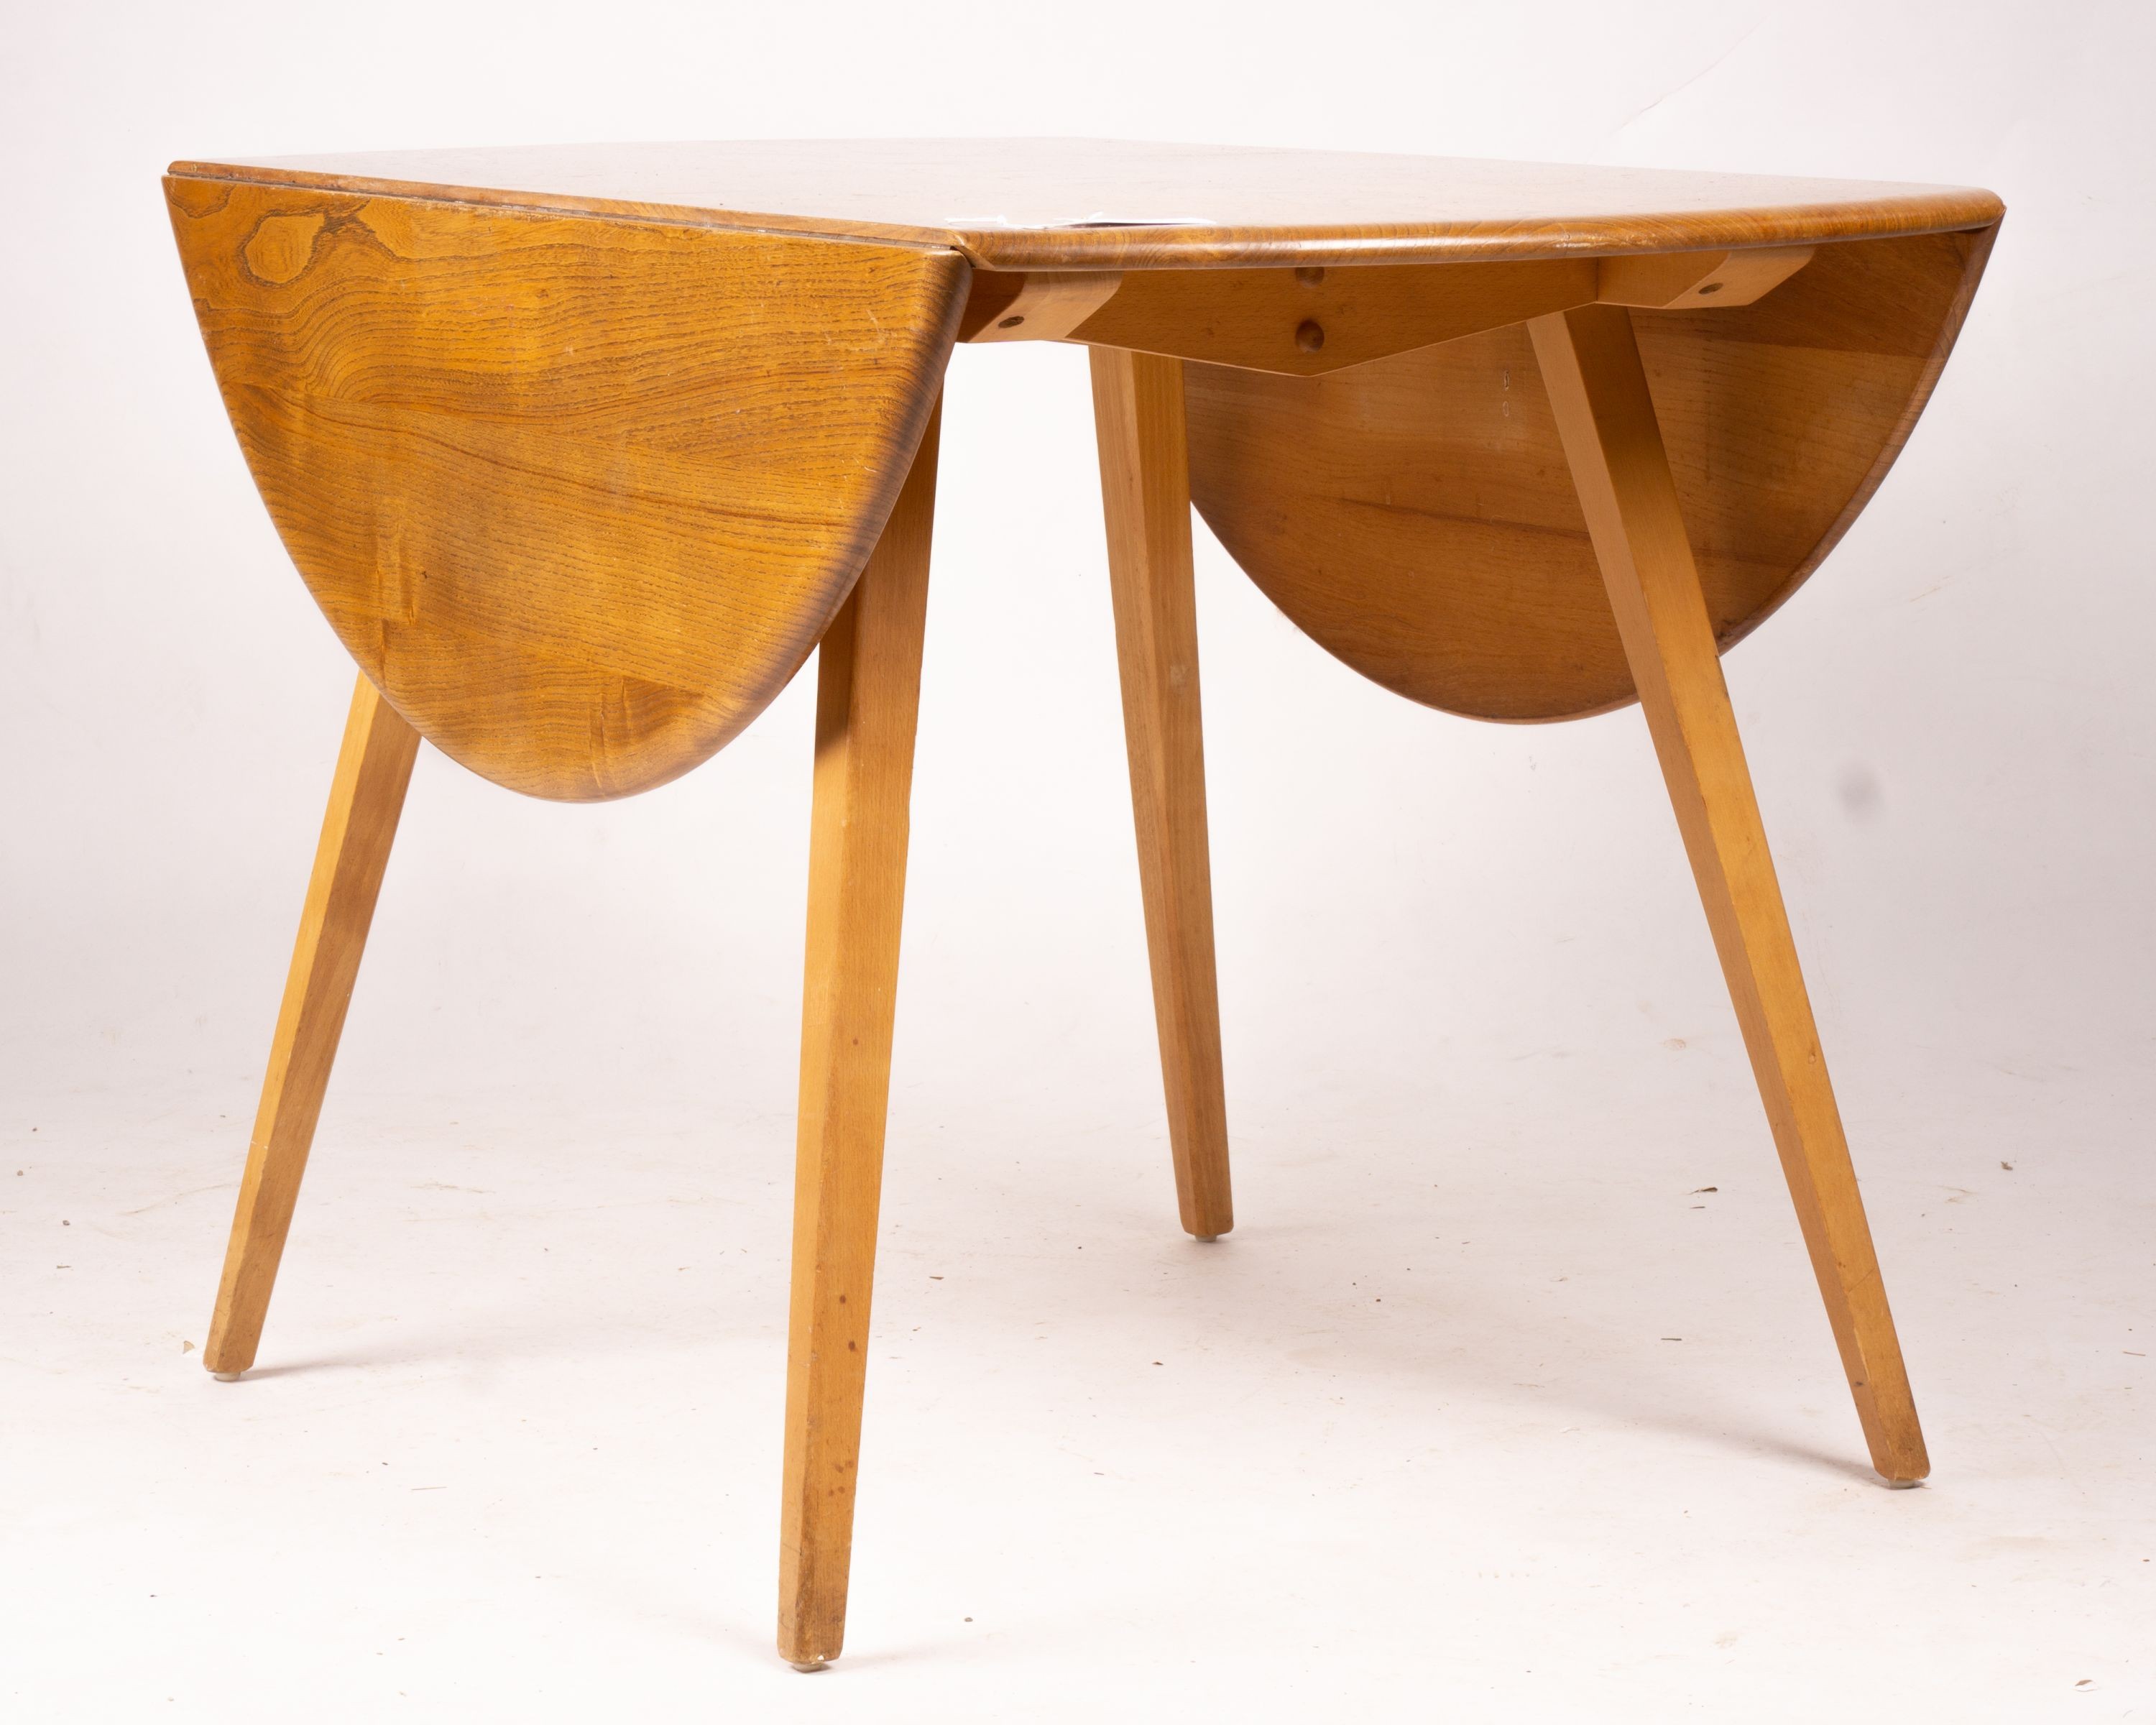 An Ercol light elm and beech circular drop leaf dining table, length 124cm extended, width 113cm, height 72cm